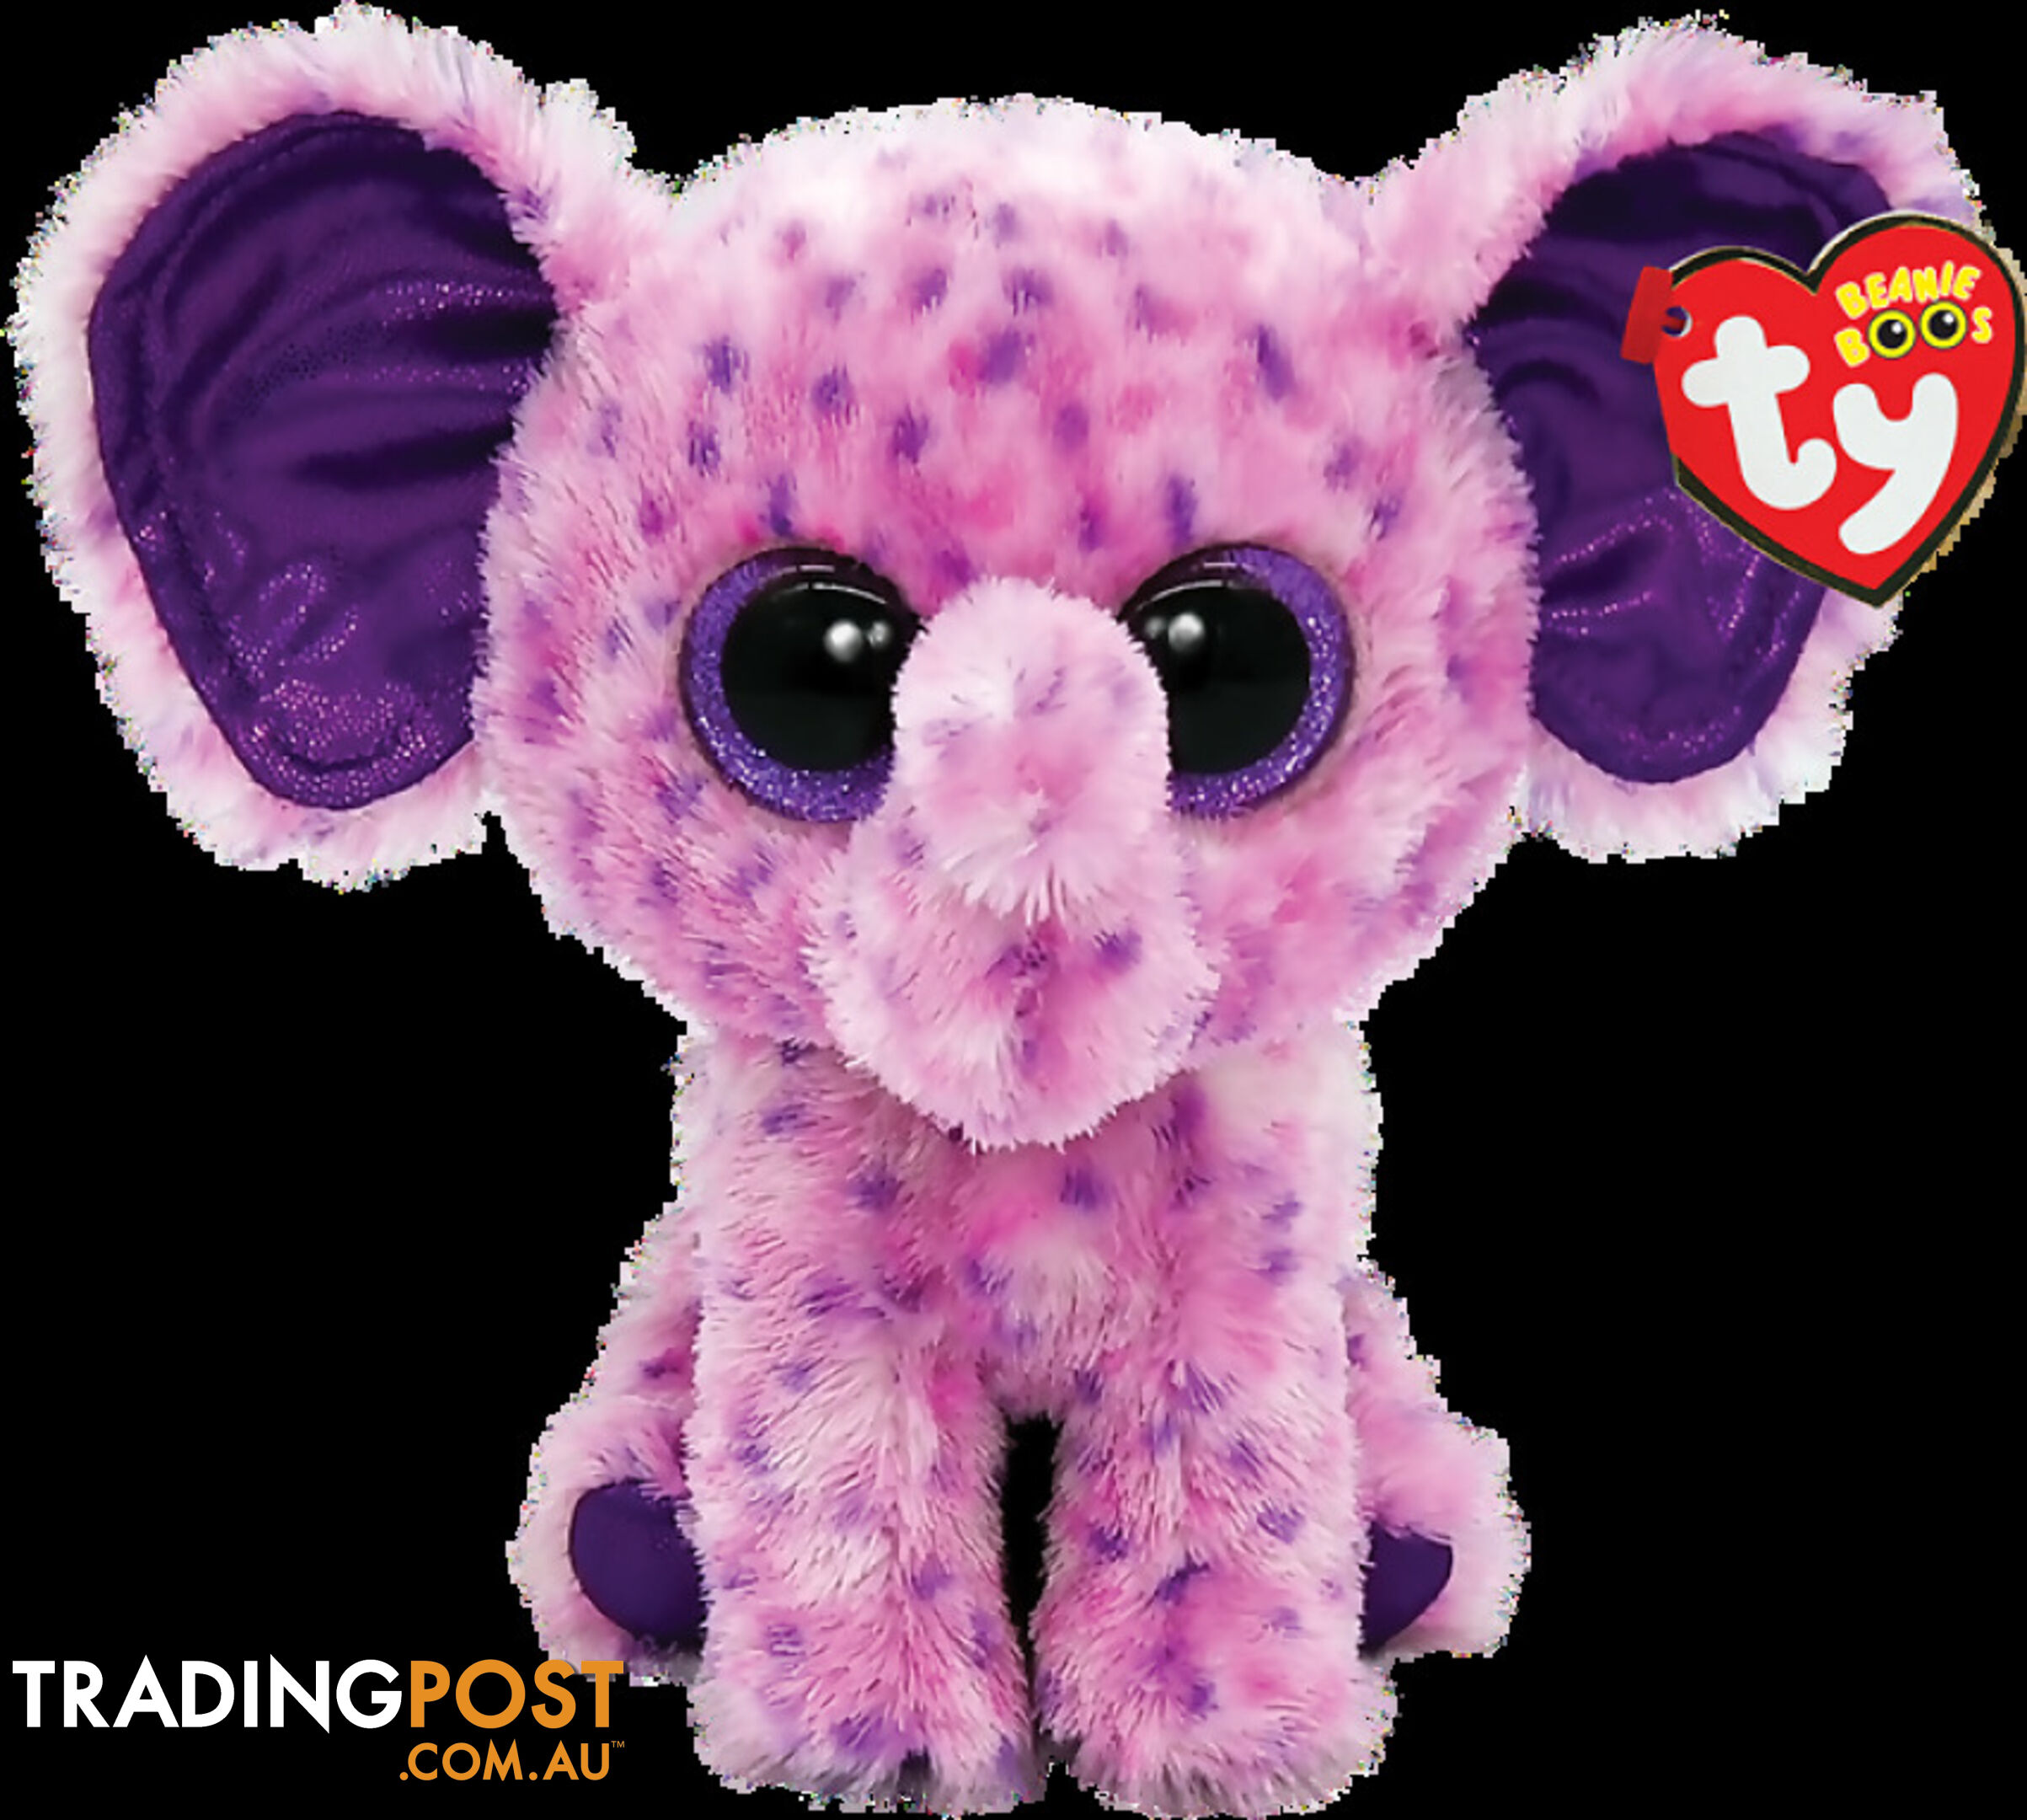 Ty - Beanie Boos - Eva Pink Speckled Elephant Small 15cm - Bg36386 - 008421363865